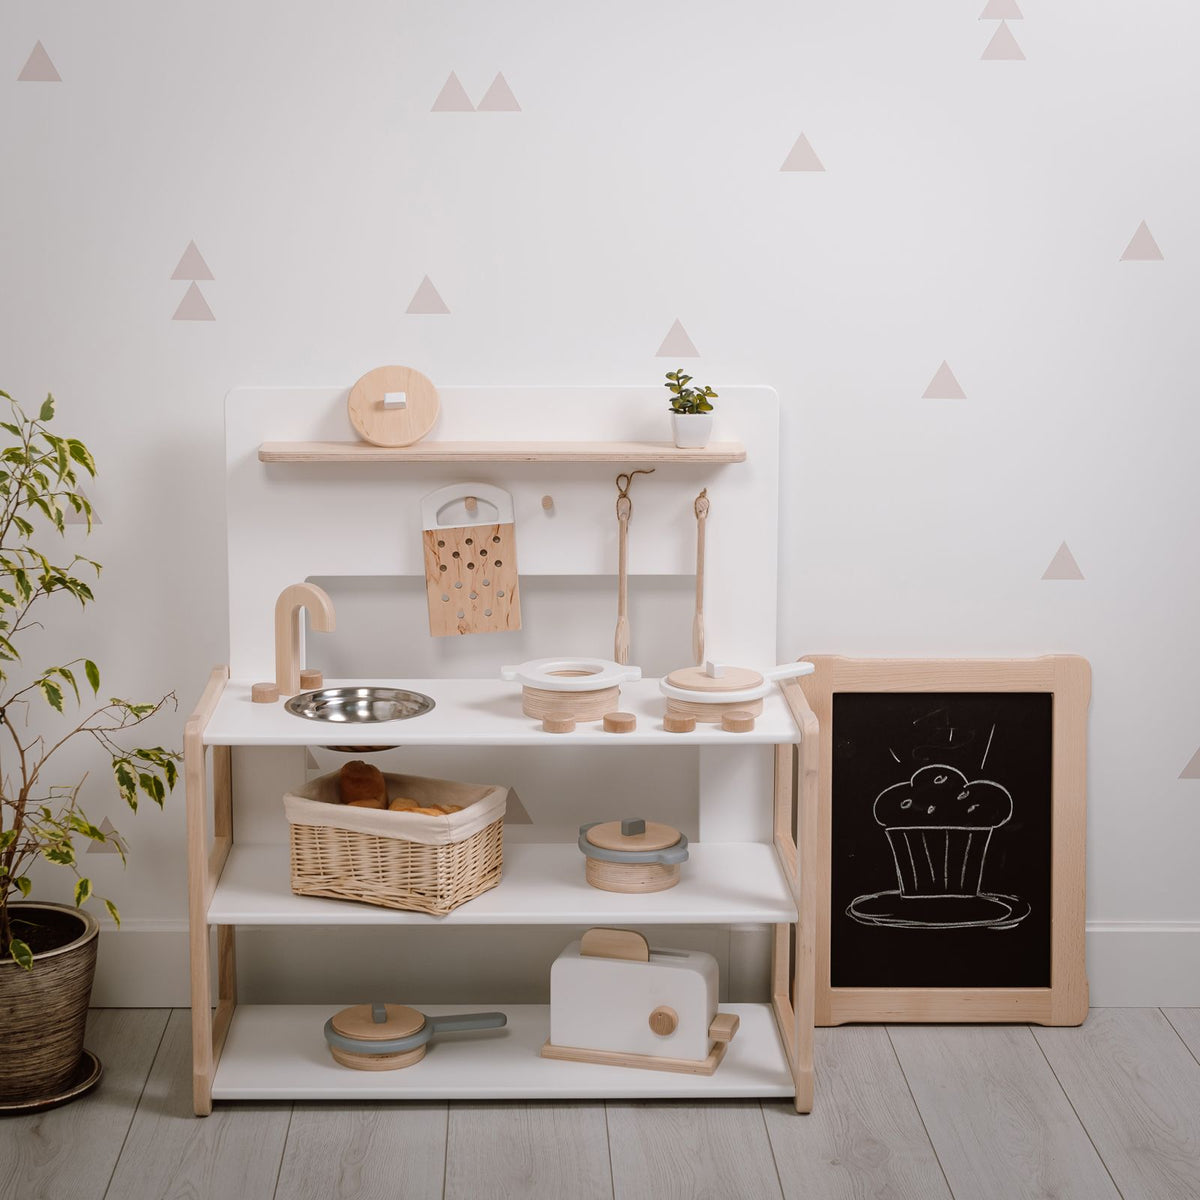 Toy kitchen - Montessori®